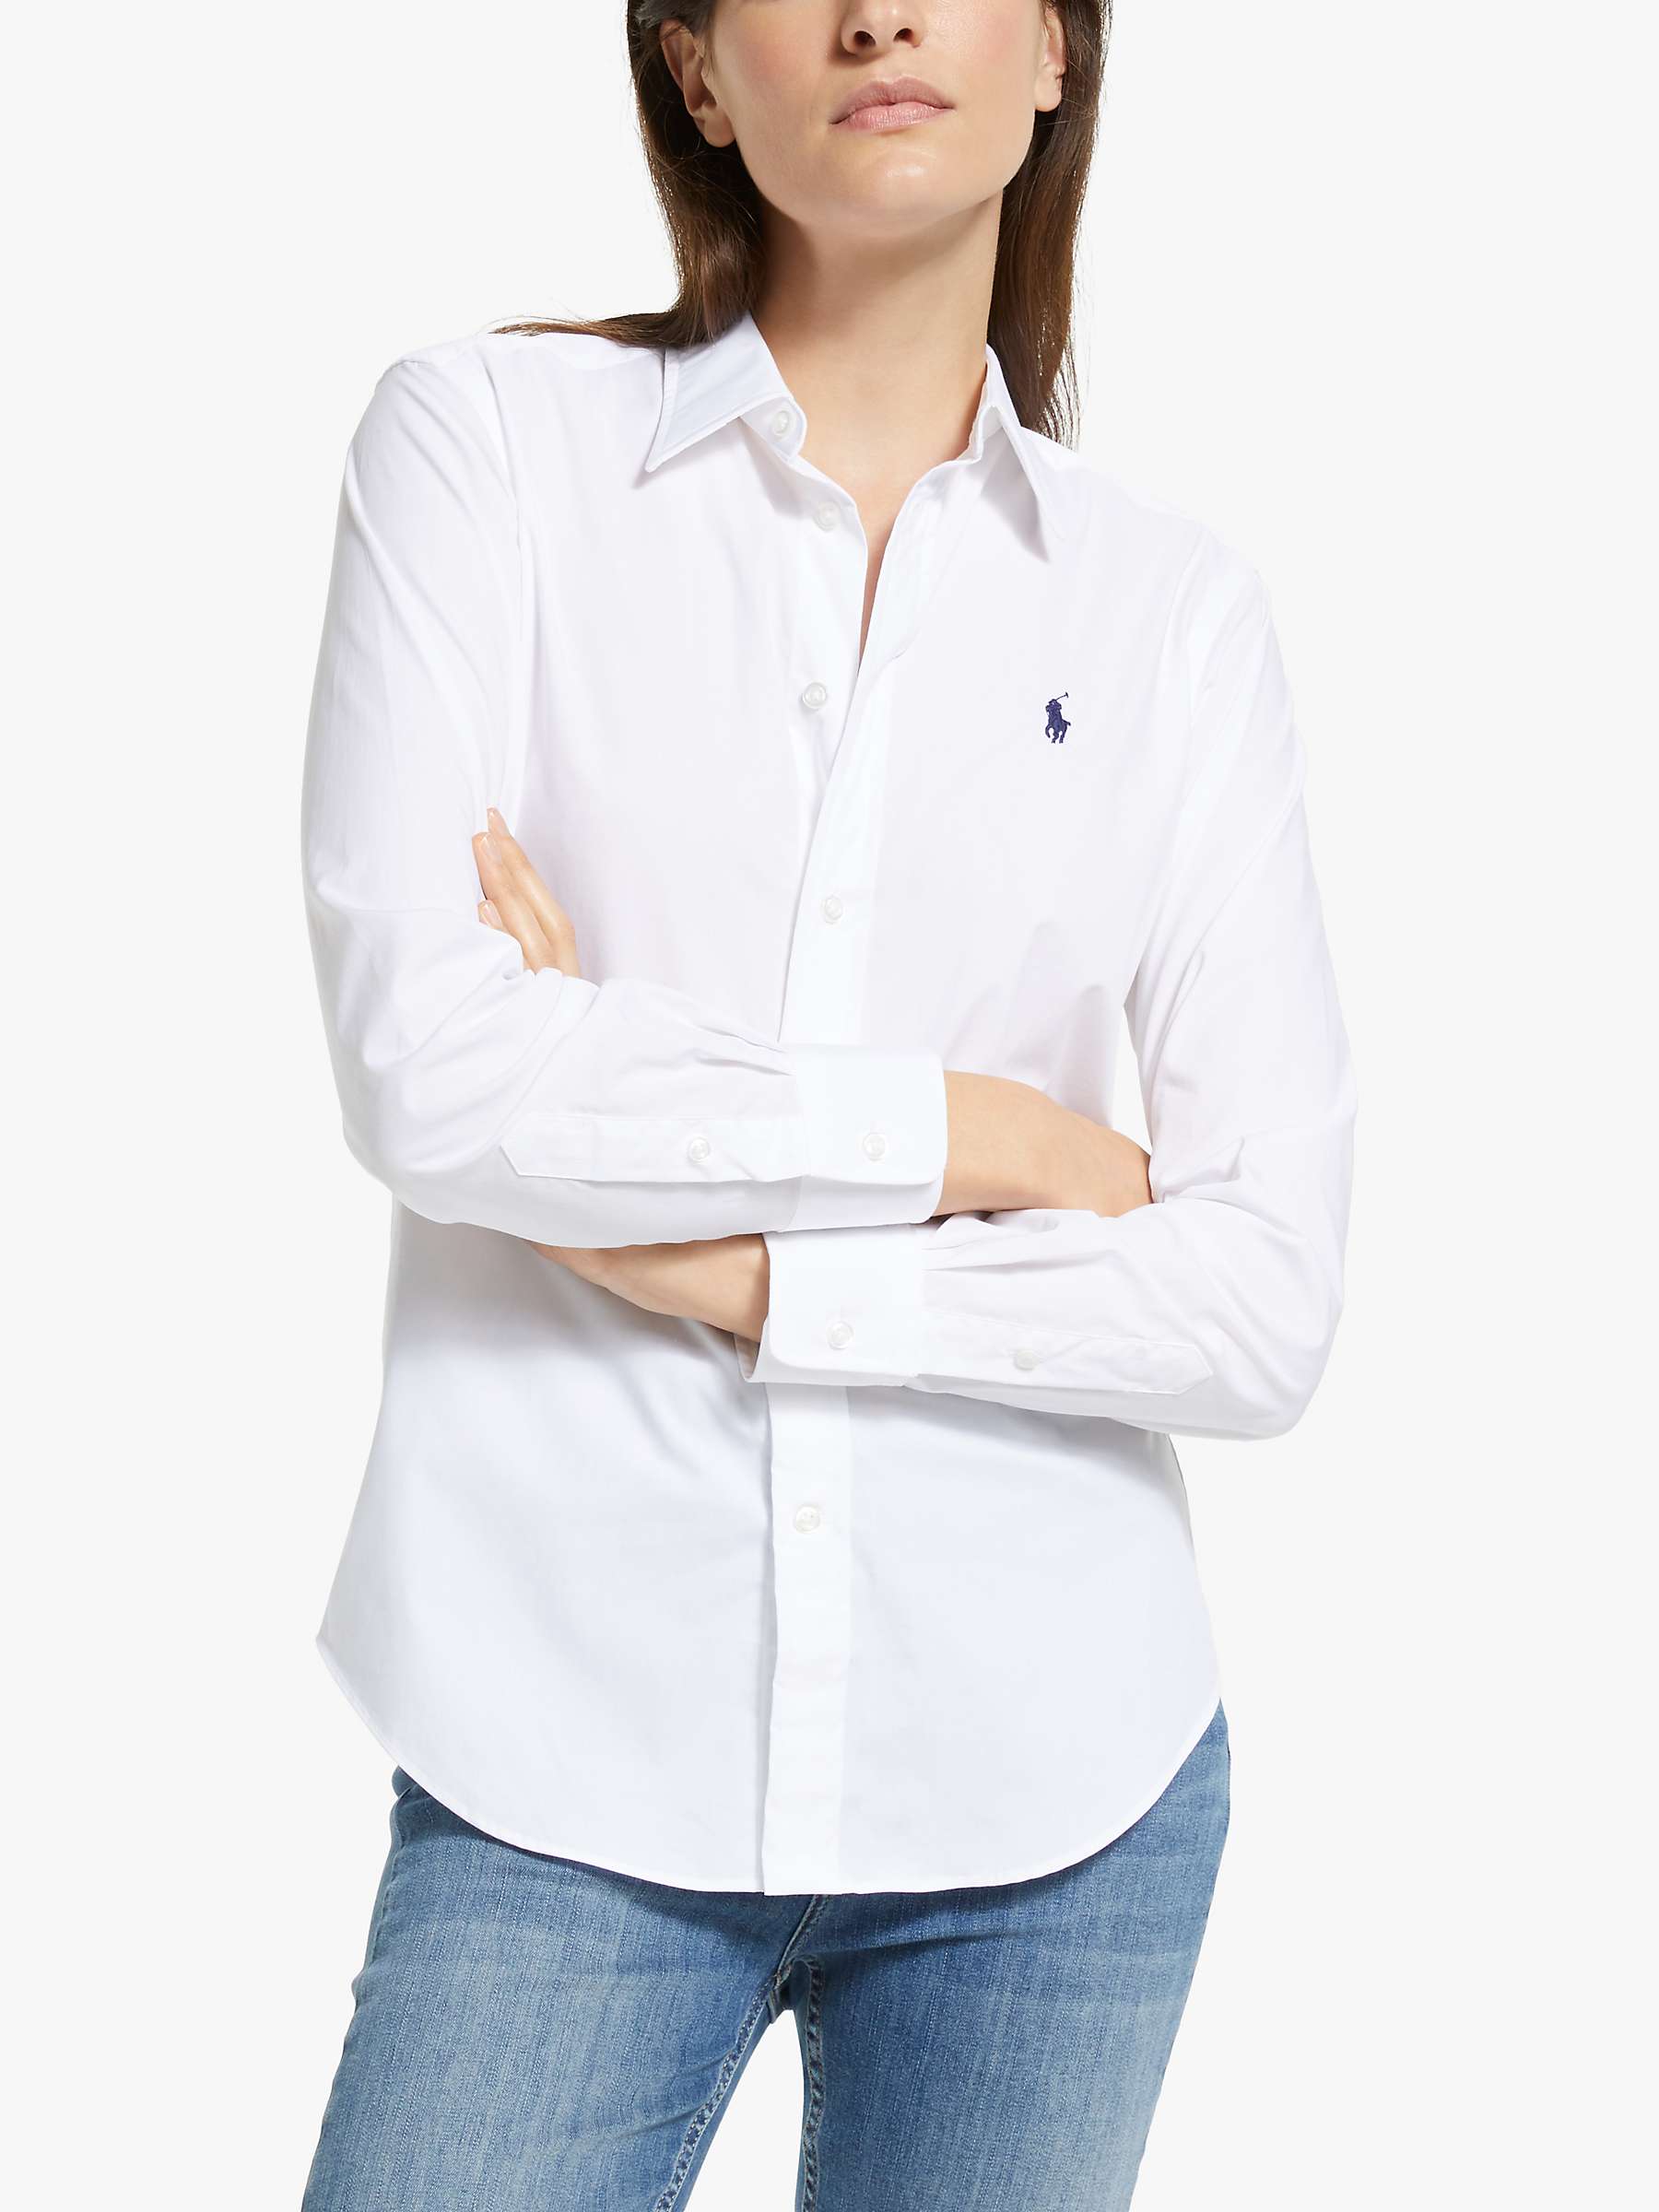 Polo Ralph Lauren Georgia Shirt, White at John Lewis & Partners